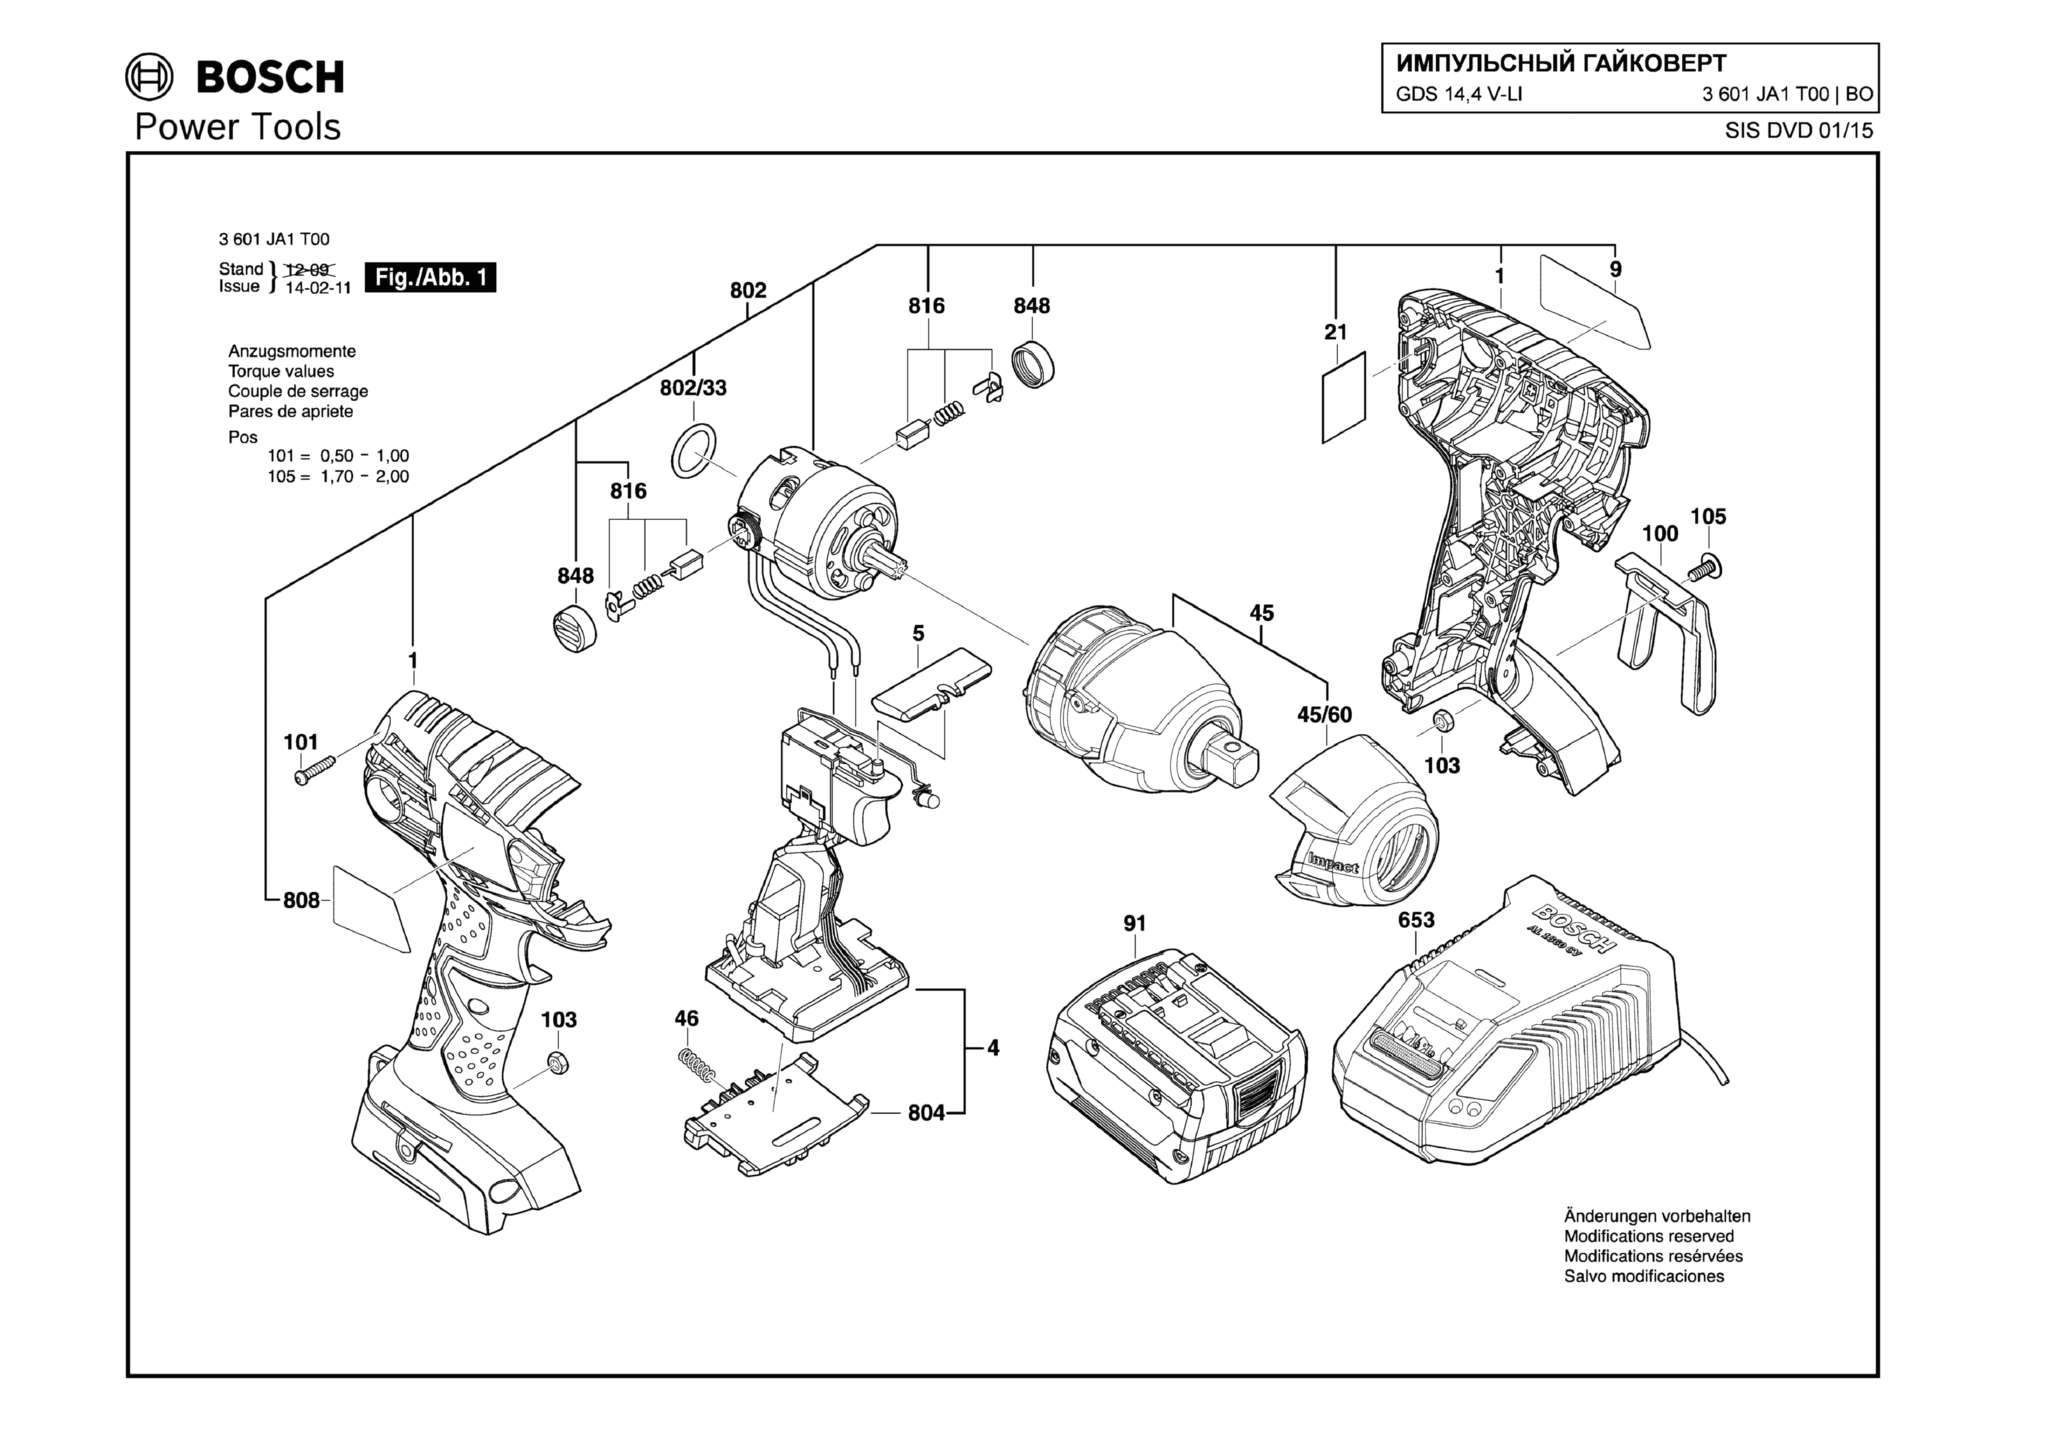 Запчасти, схема и деталировка Bosch GDS 14,4 V-LI (ТИП 3601JA1T00)